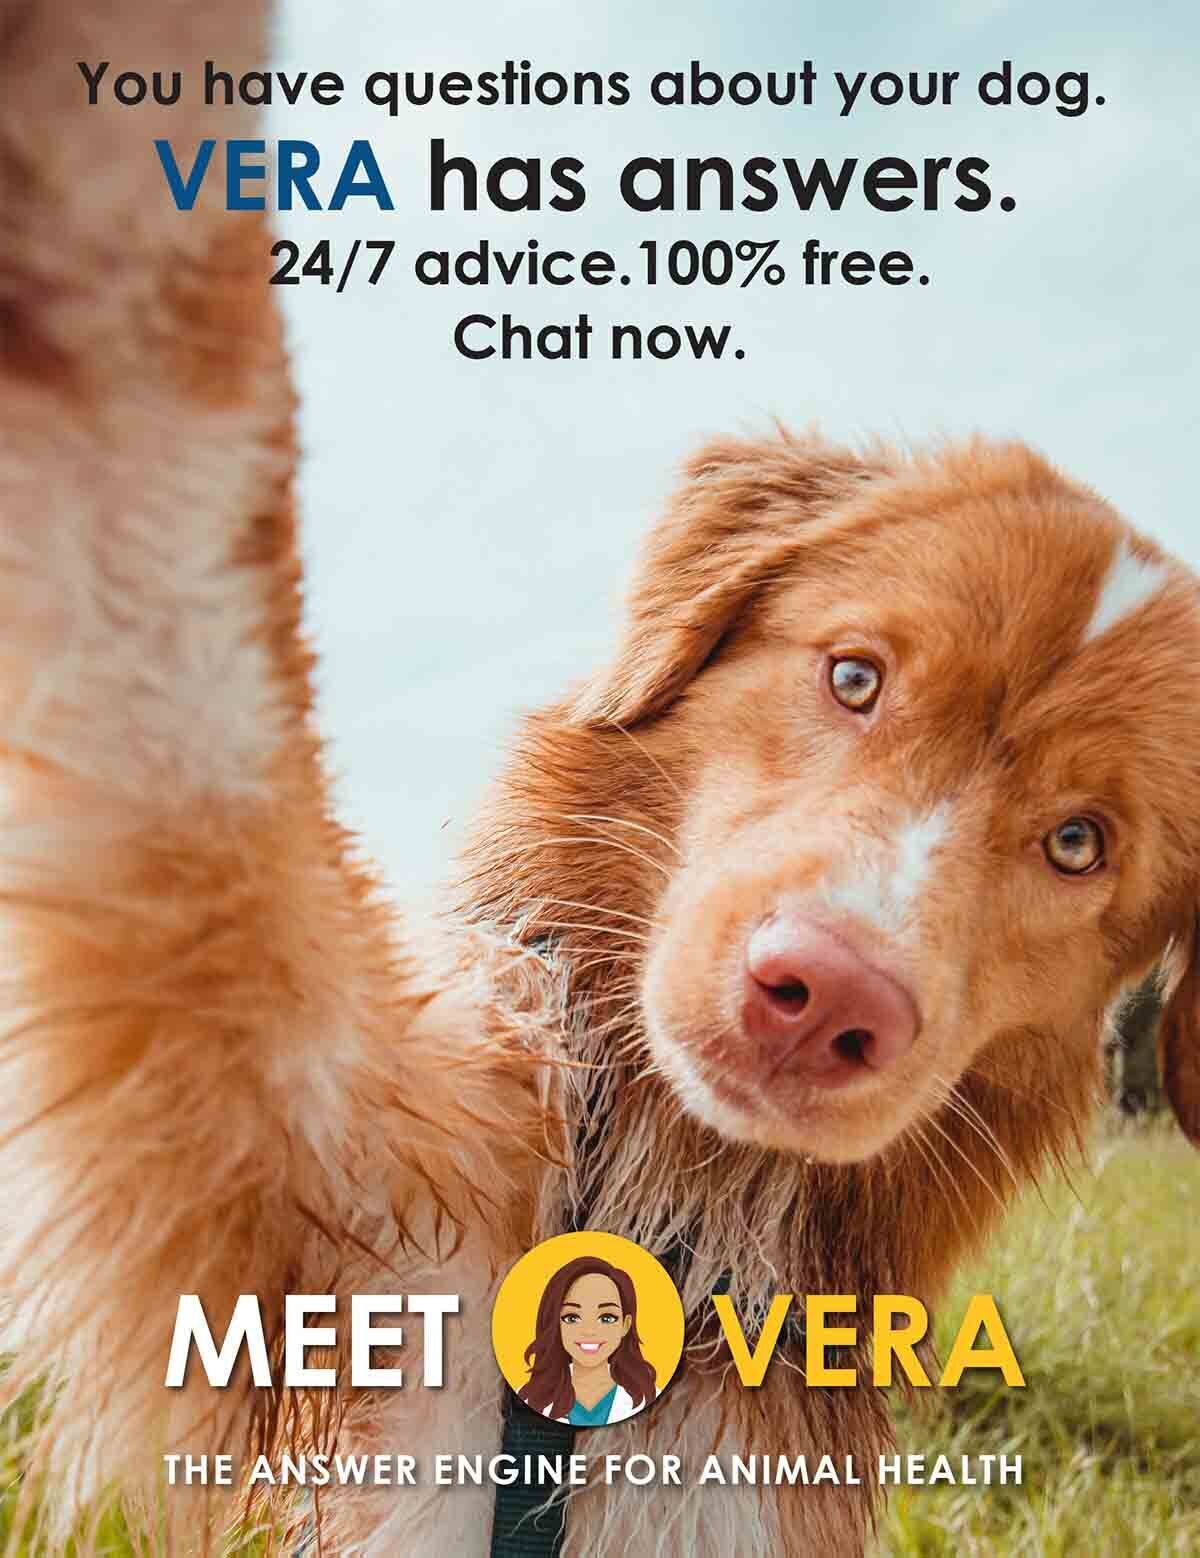 Meet VERA